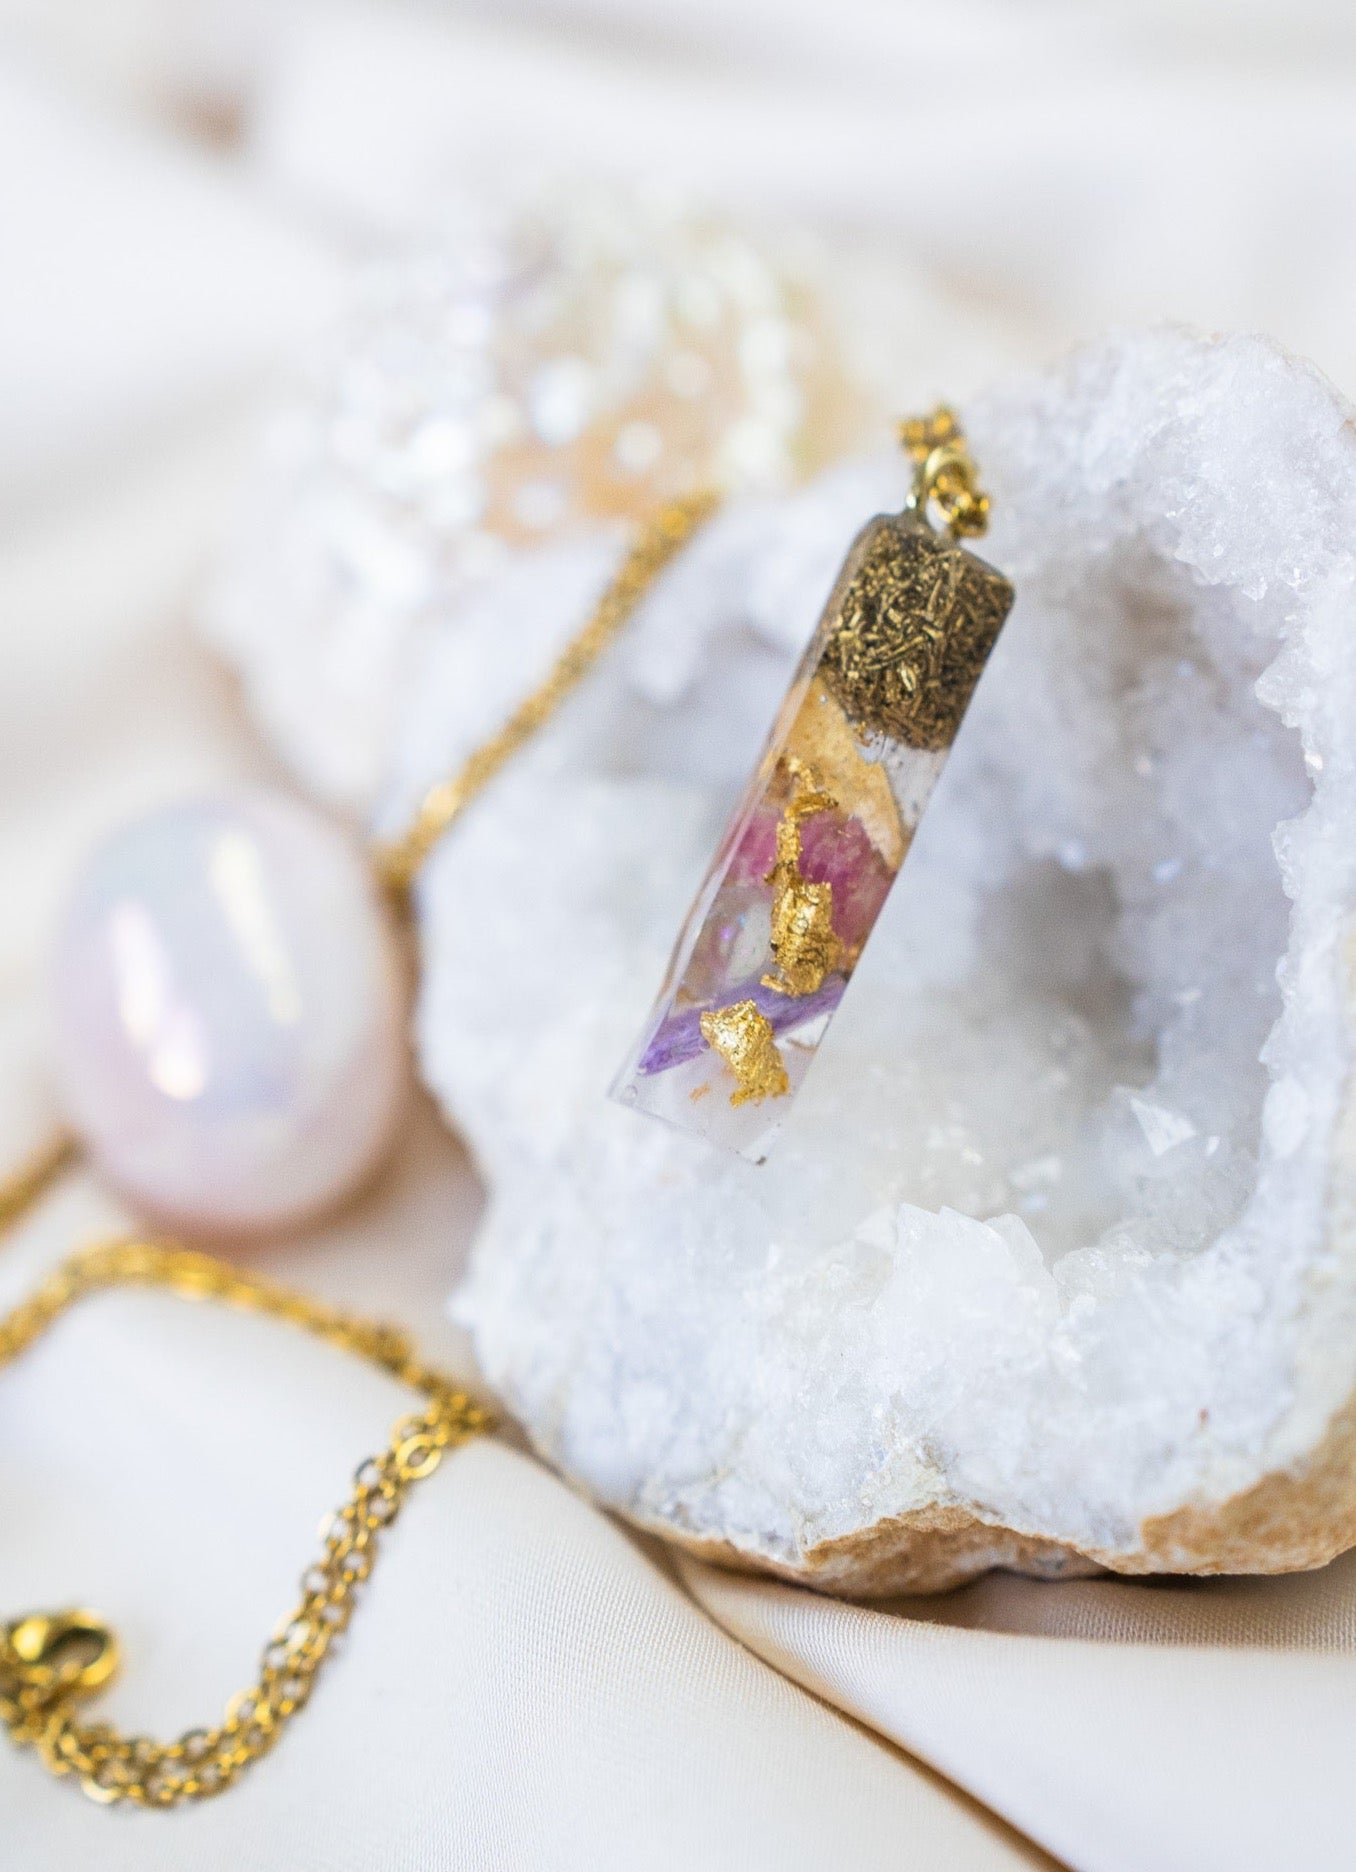 Pink God(dess) Crystal Healing Pendant For Love, Magic & Feminine Energy